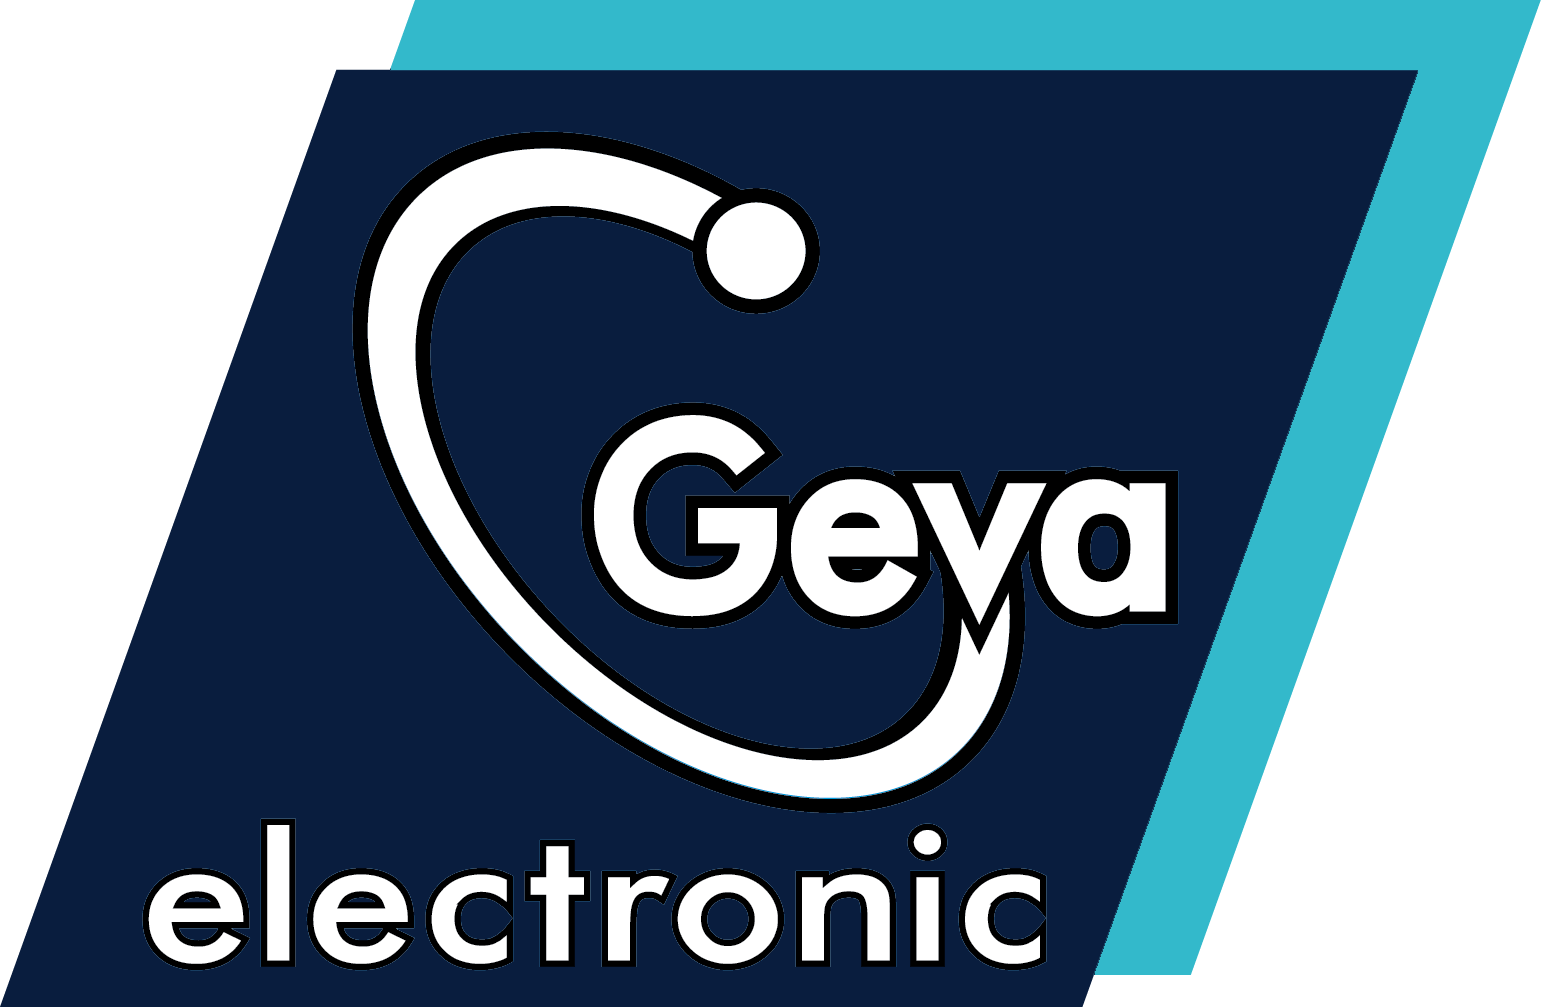 Geva Electronics - Paisje elektronike, sisteme administrimi hotelerie, IPTV hotelerie, sisteme sigurise: kamera, alarme, mbrojtjes nga zjarri